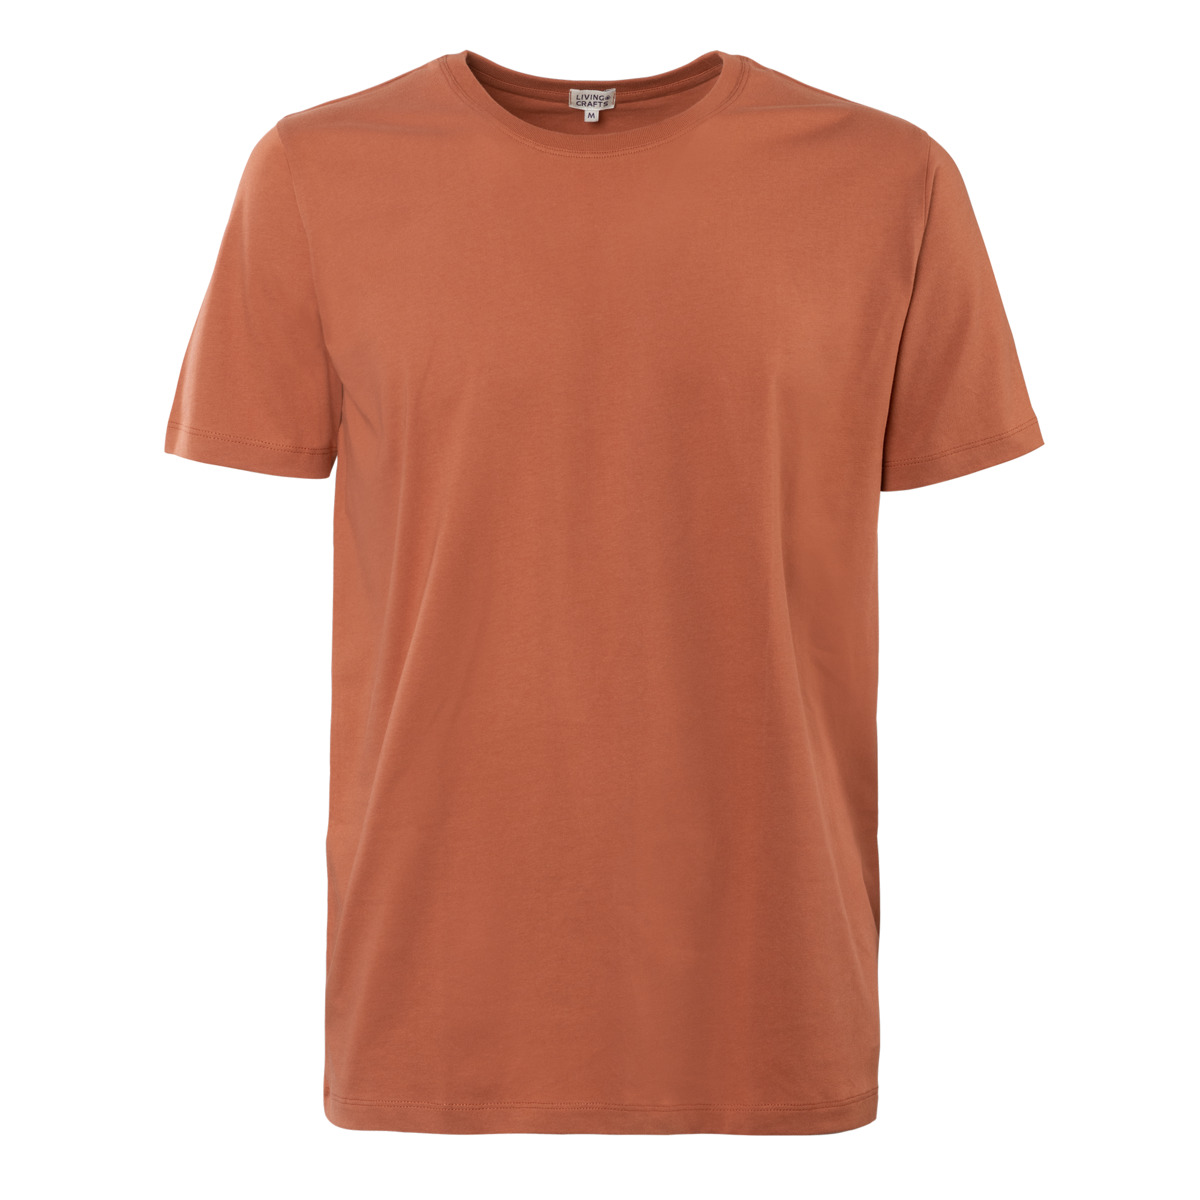 Brown T-shirt, ILKO